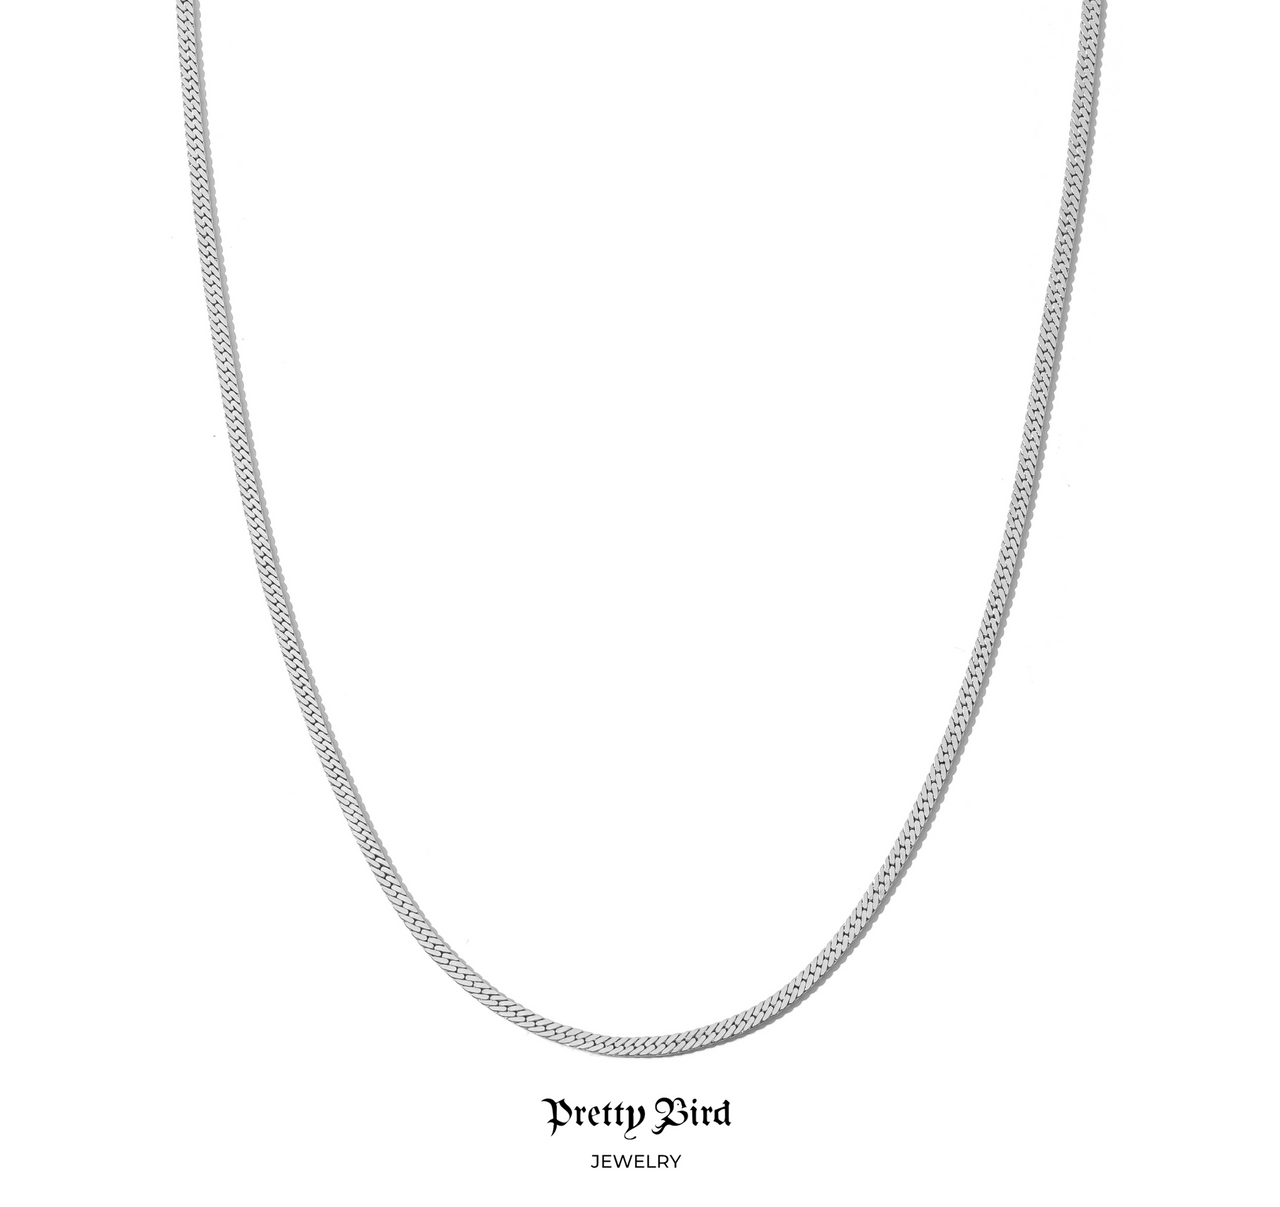 The Skinny Herringbone Necklace